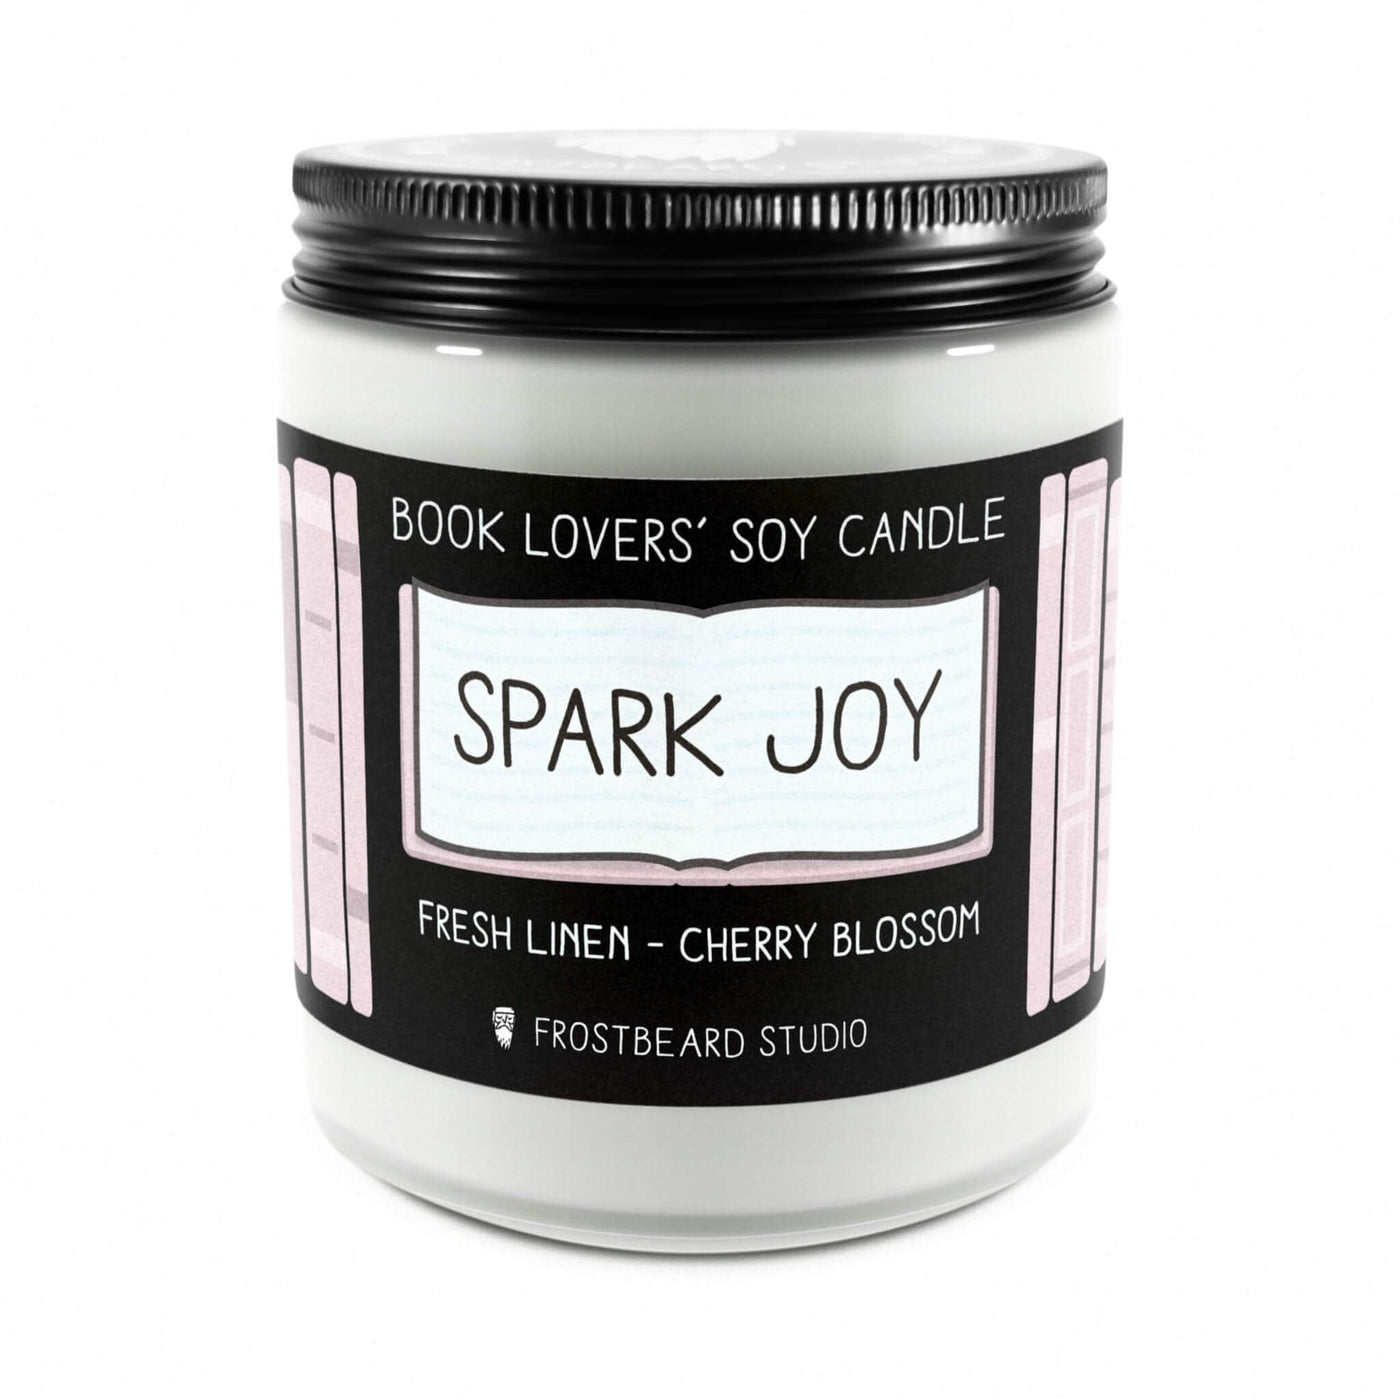 Spark Joy  -  8 oz Jar  -  Book Lovers' Soy Candle  -  Frostbeard Studio